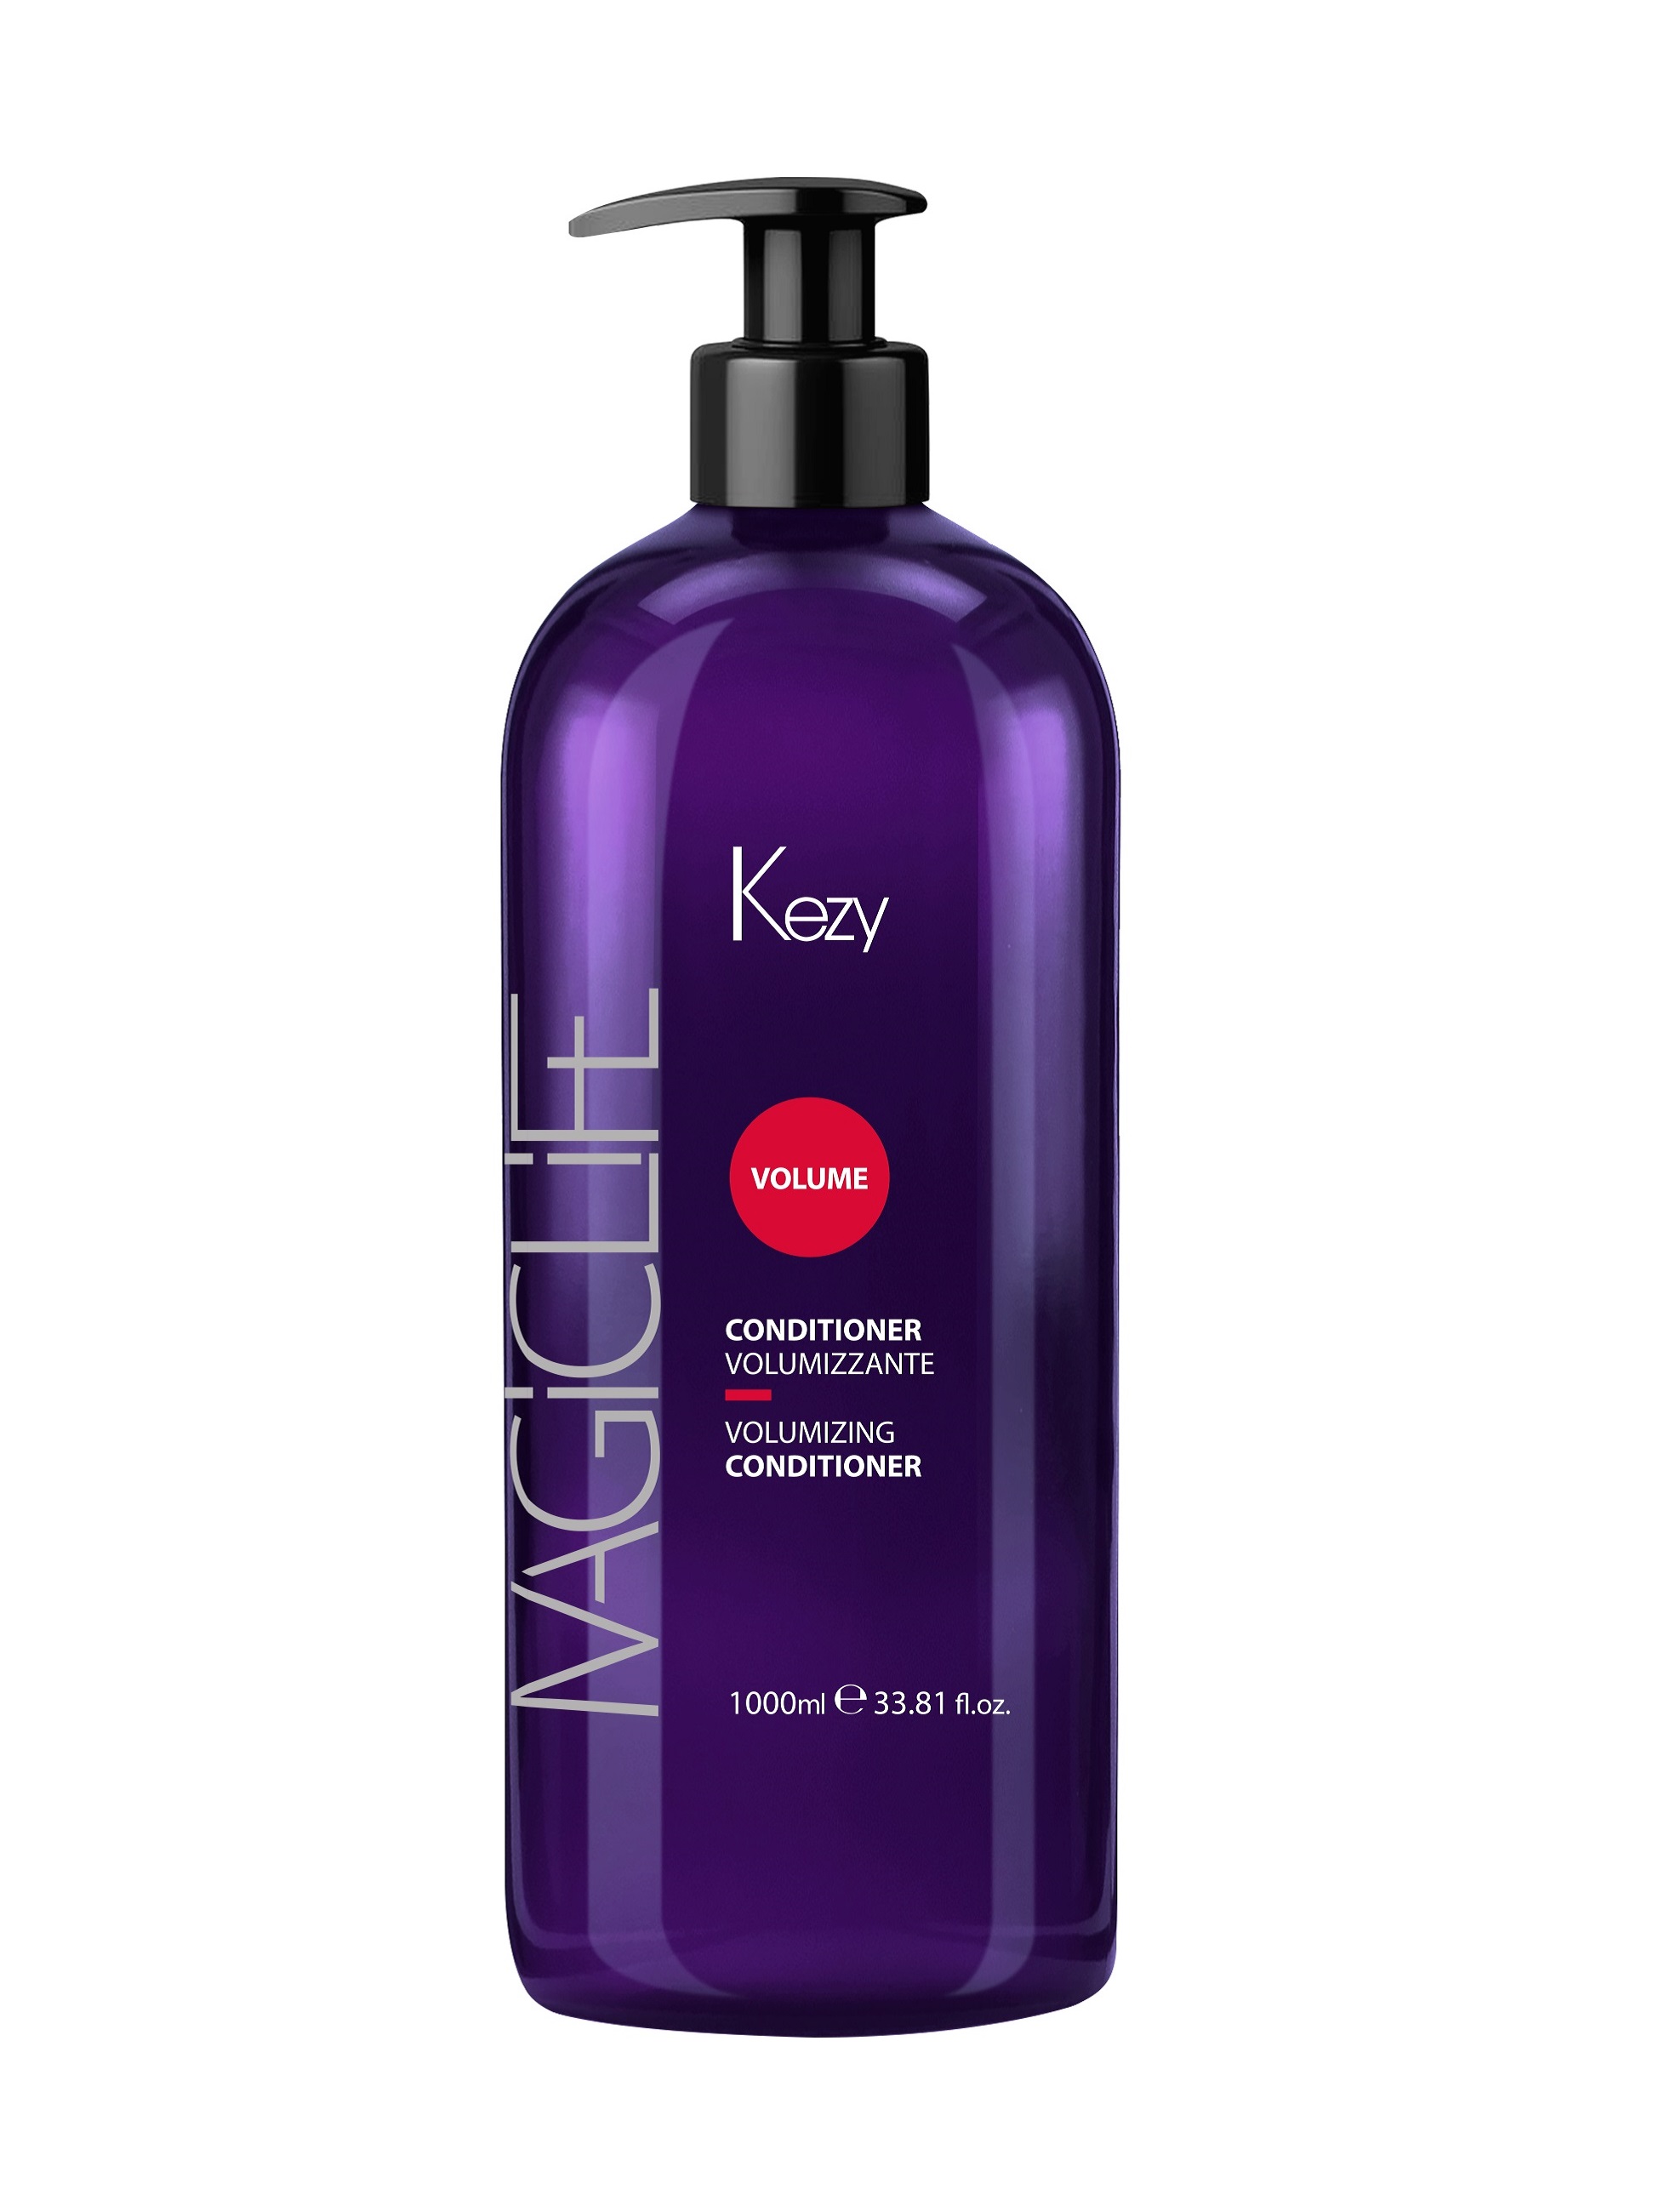 Кондиционер KEZY для объёма для всех типов волос 1000мл, Линия MAGIC LIFE VOLUME planeta organica кондиционер для объёма волос уплотняющий